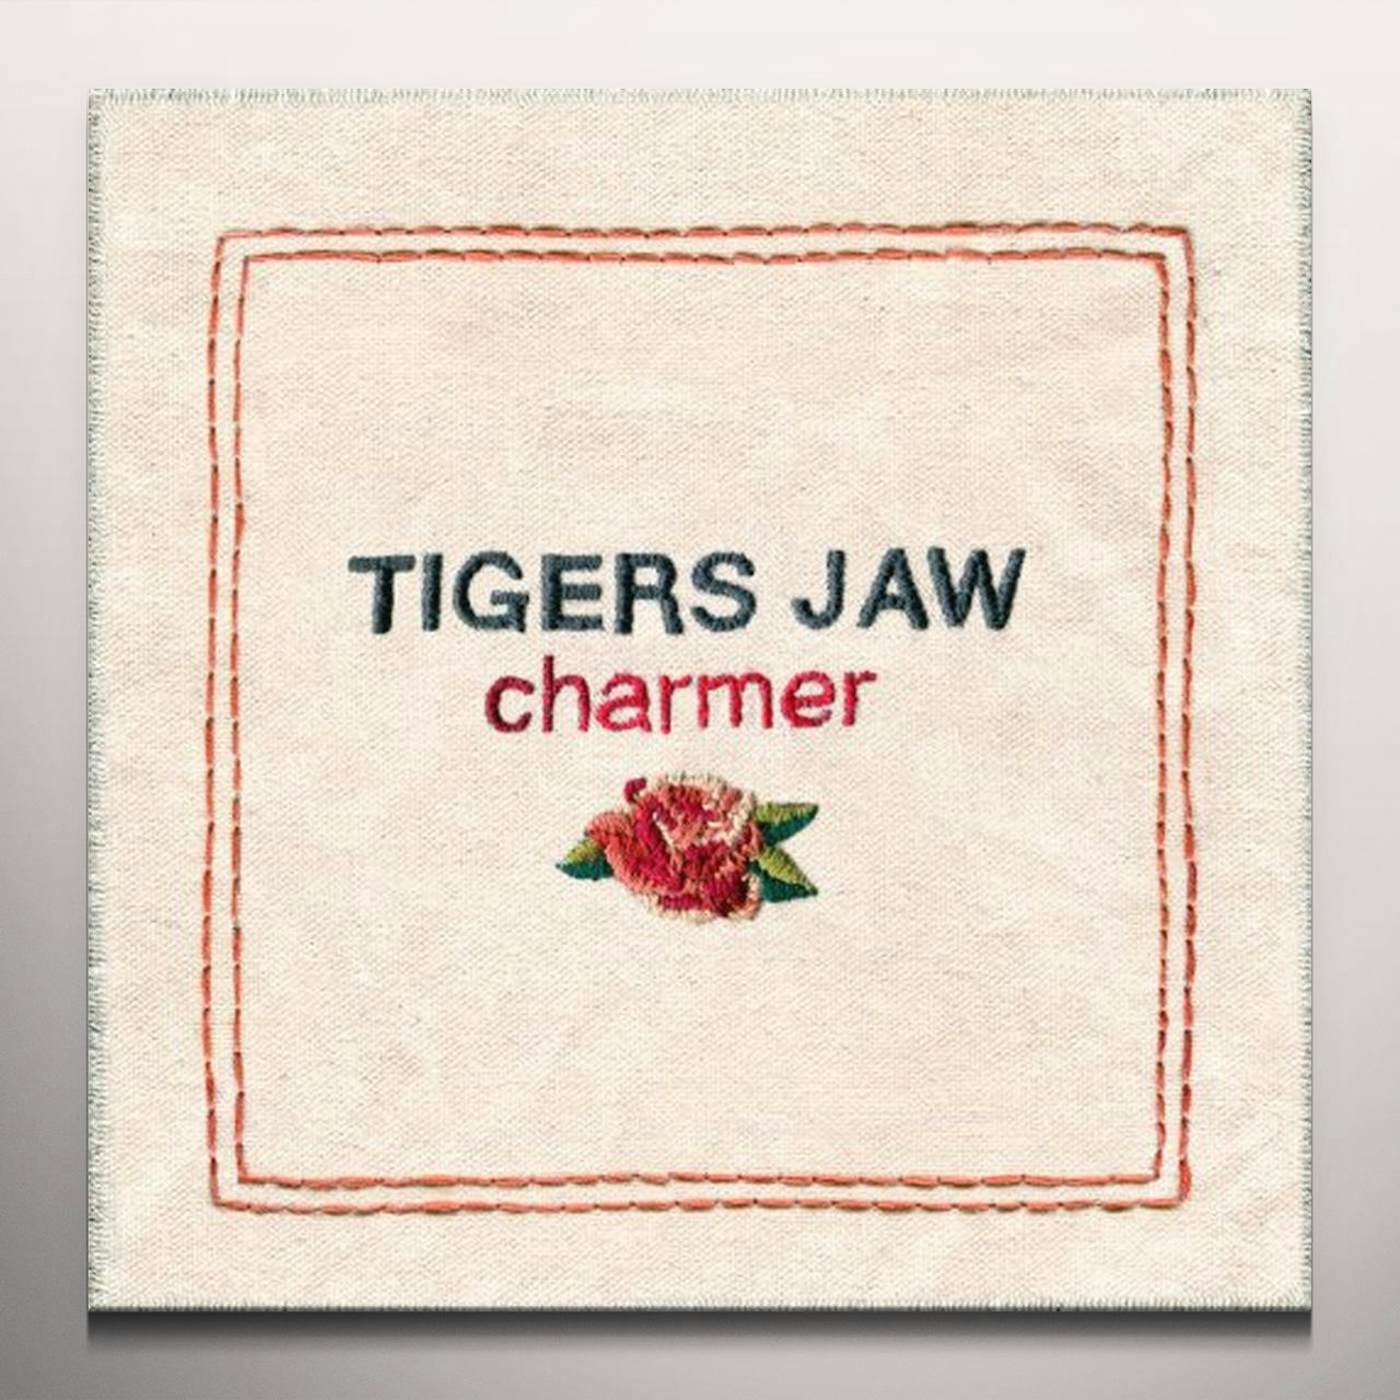 Tigers Jaw Charmer Vinyl Record